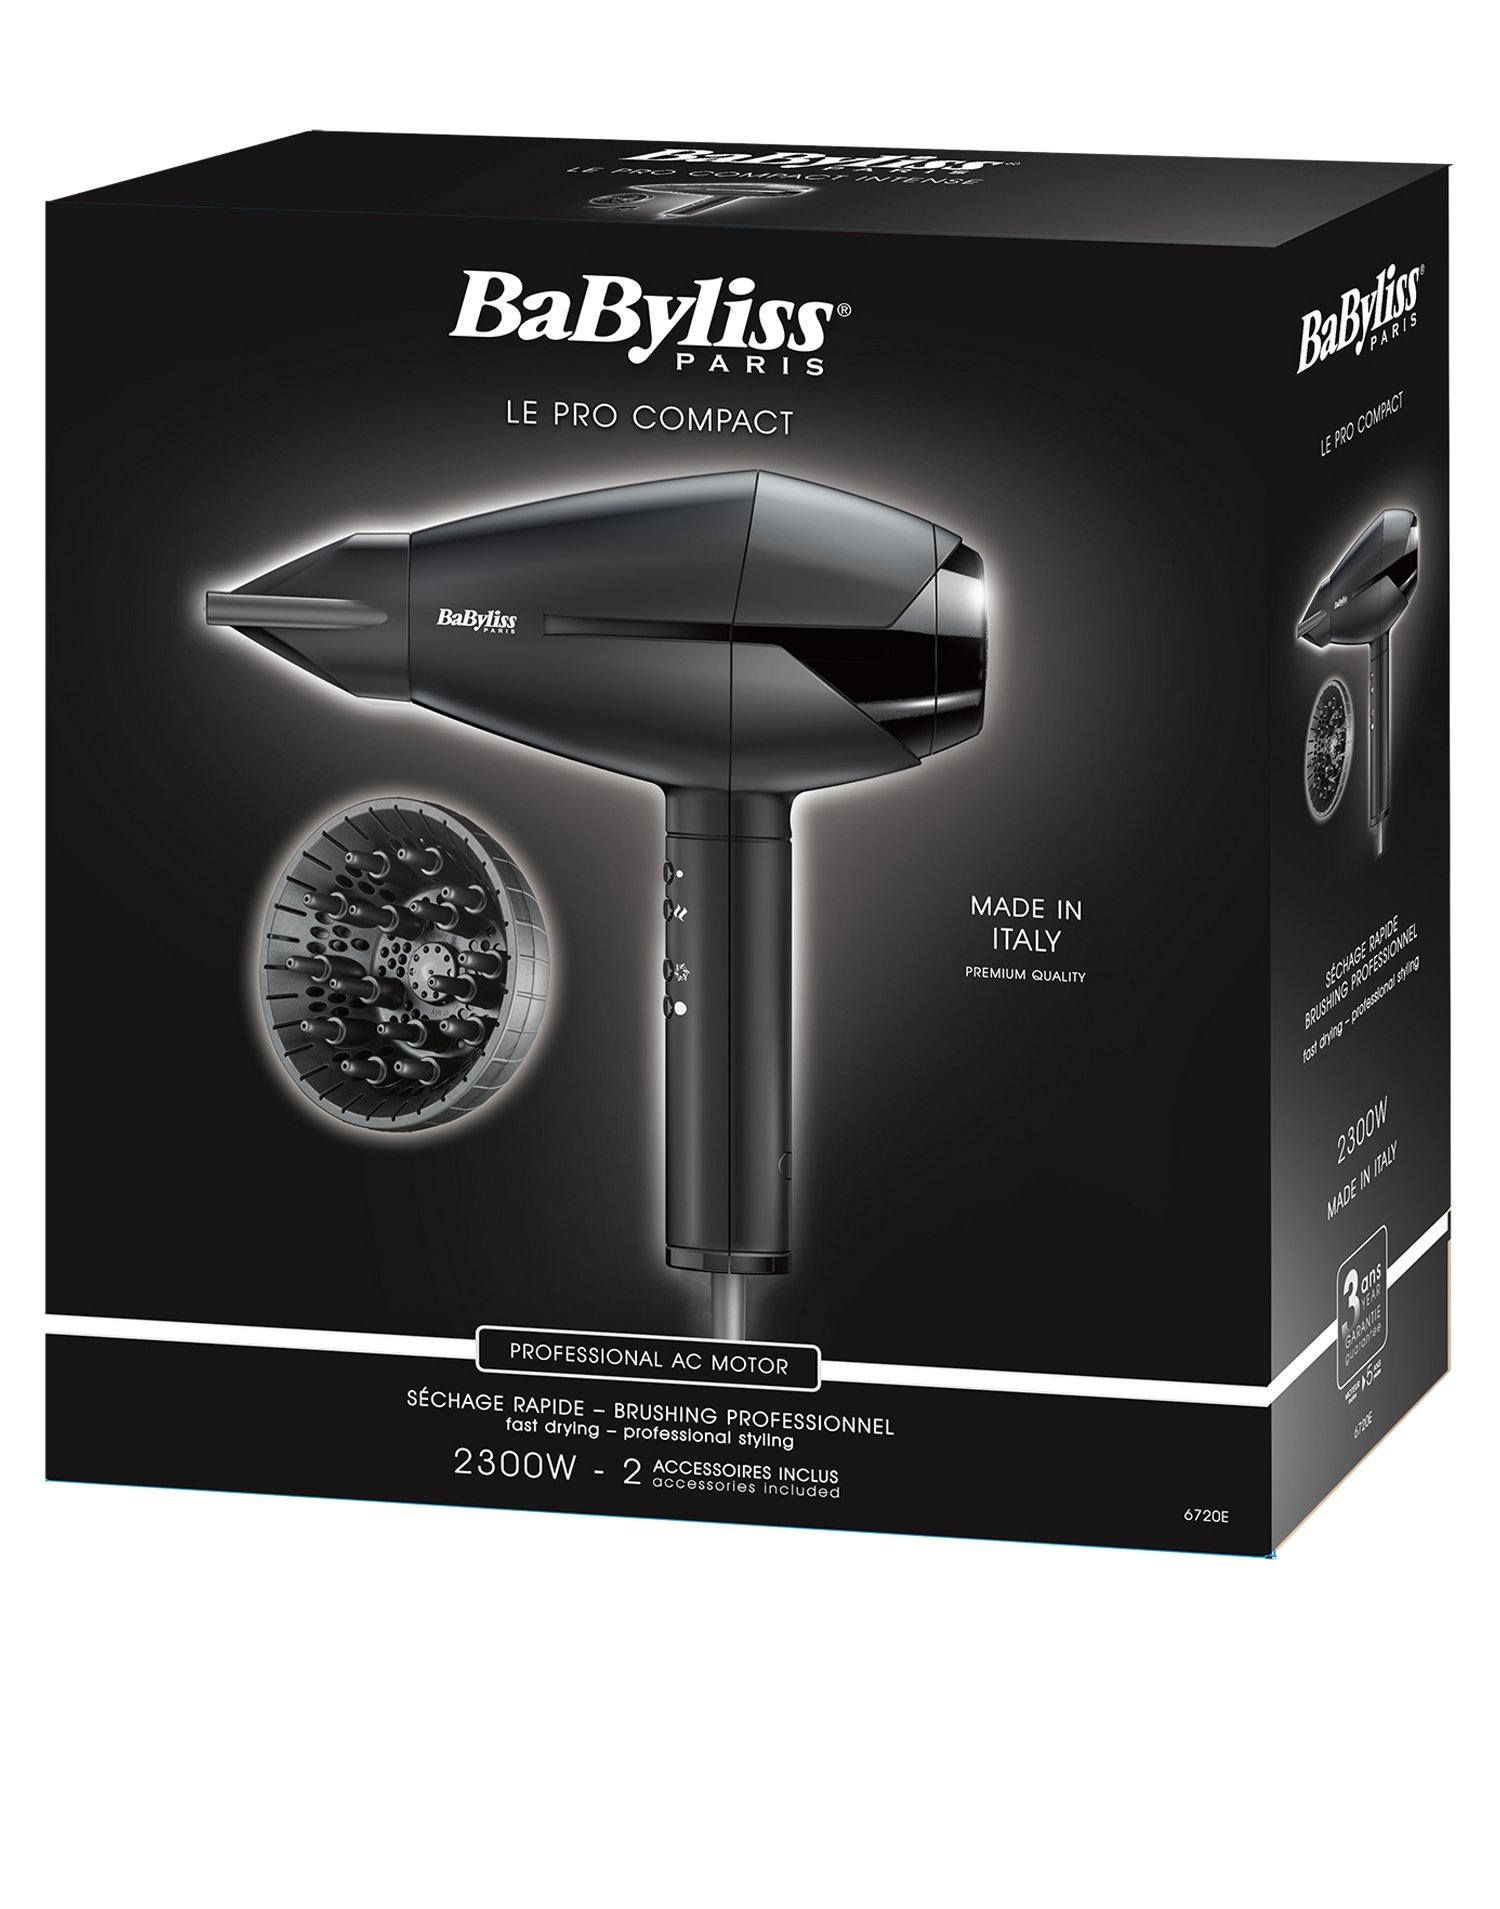 Babyliss mini hair dryer